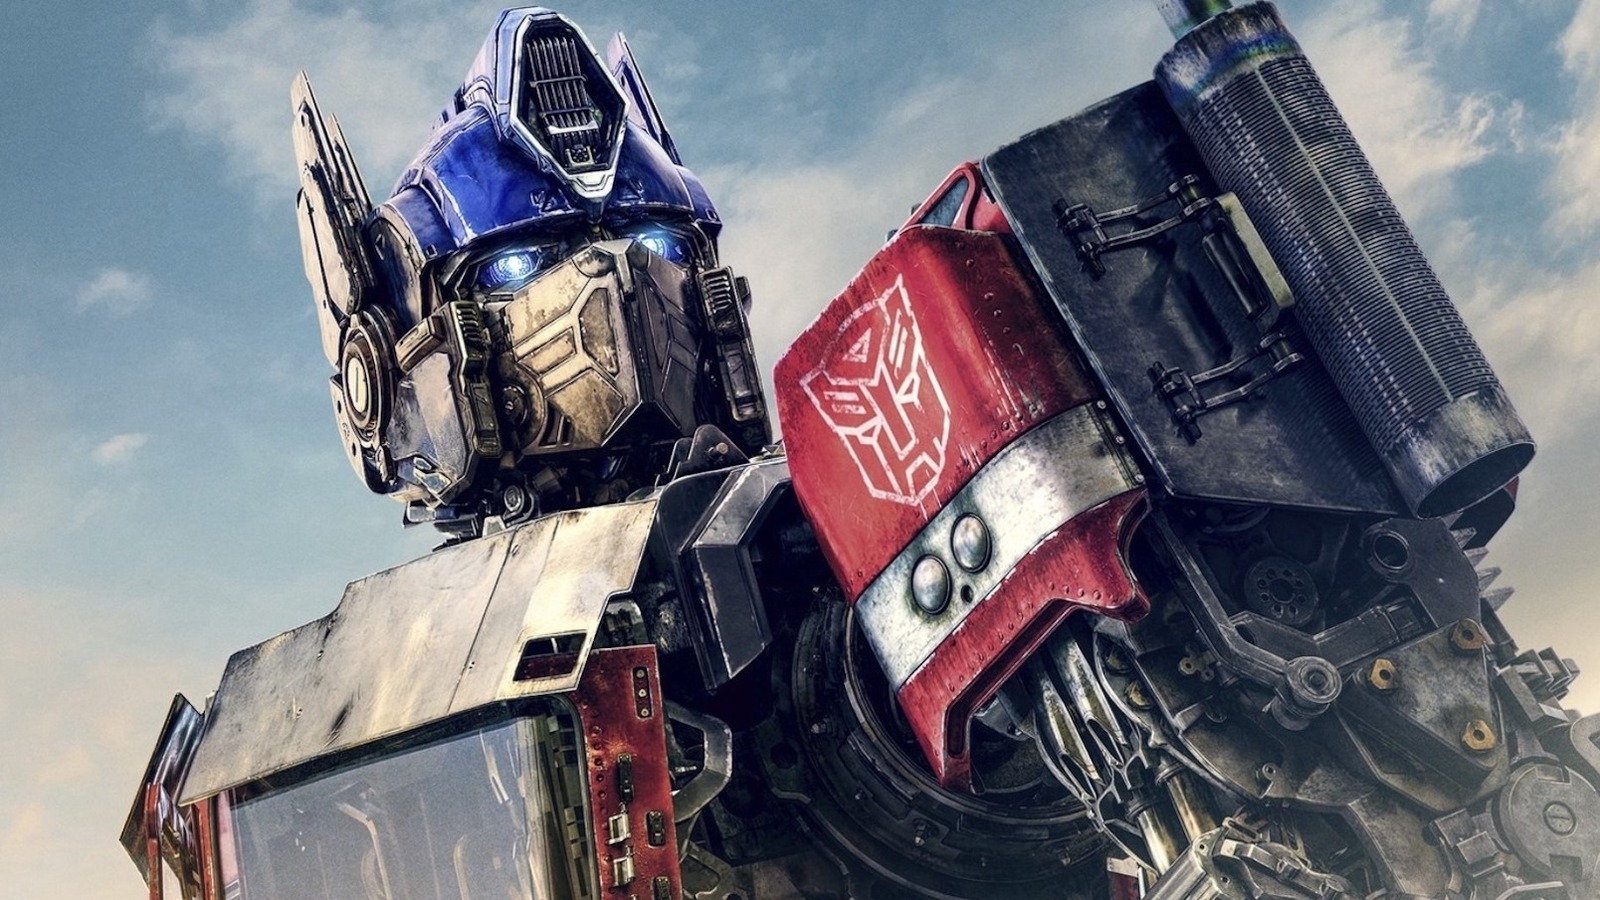 TransFormers - Best of Optimus Prime Part I 